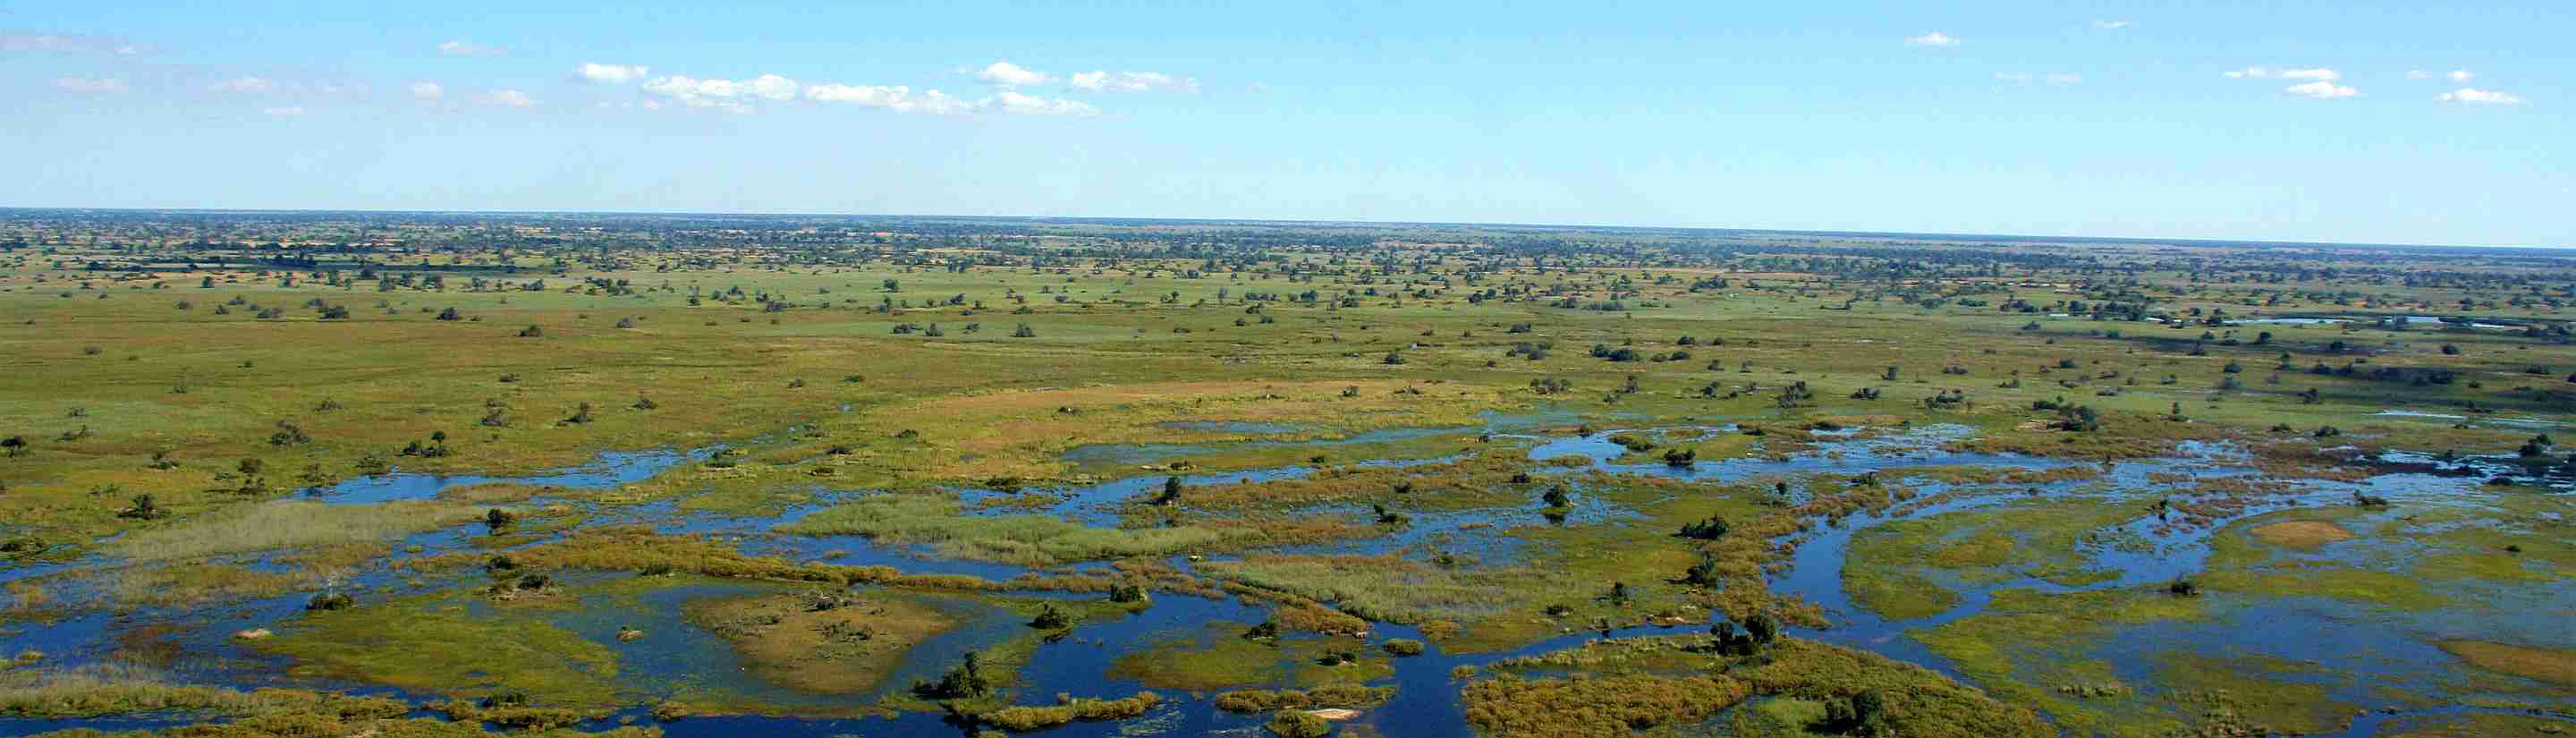 Reisebericht Botswana - von Vic Falls zum Okavango